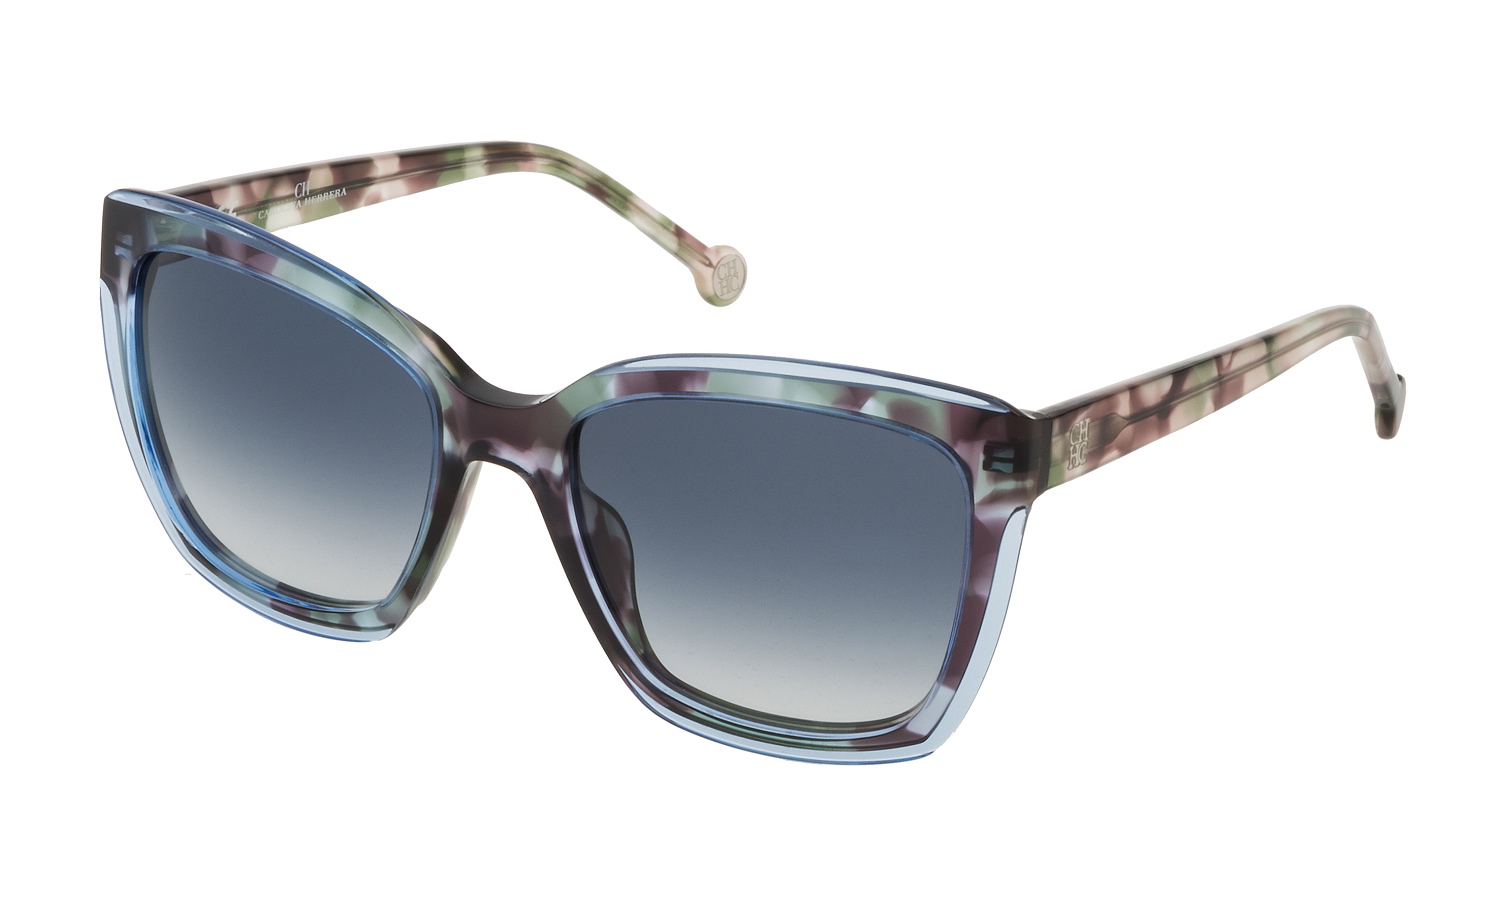 Carolina Herrera SHE788 Sunglasses from $160.30 | Carolina Herrera ...